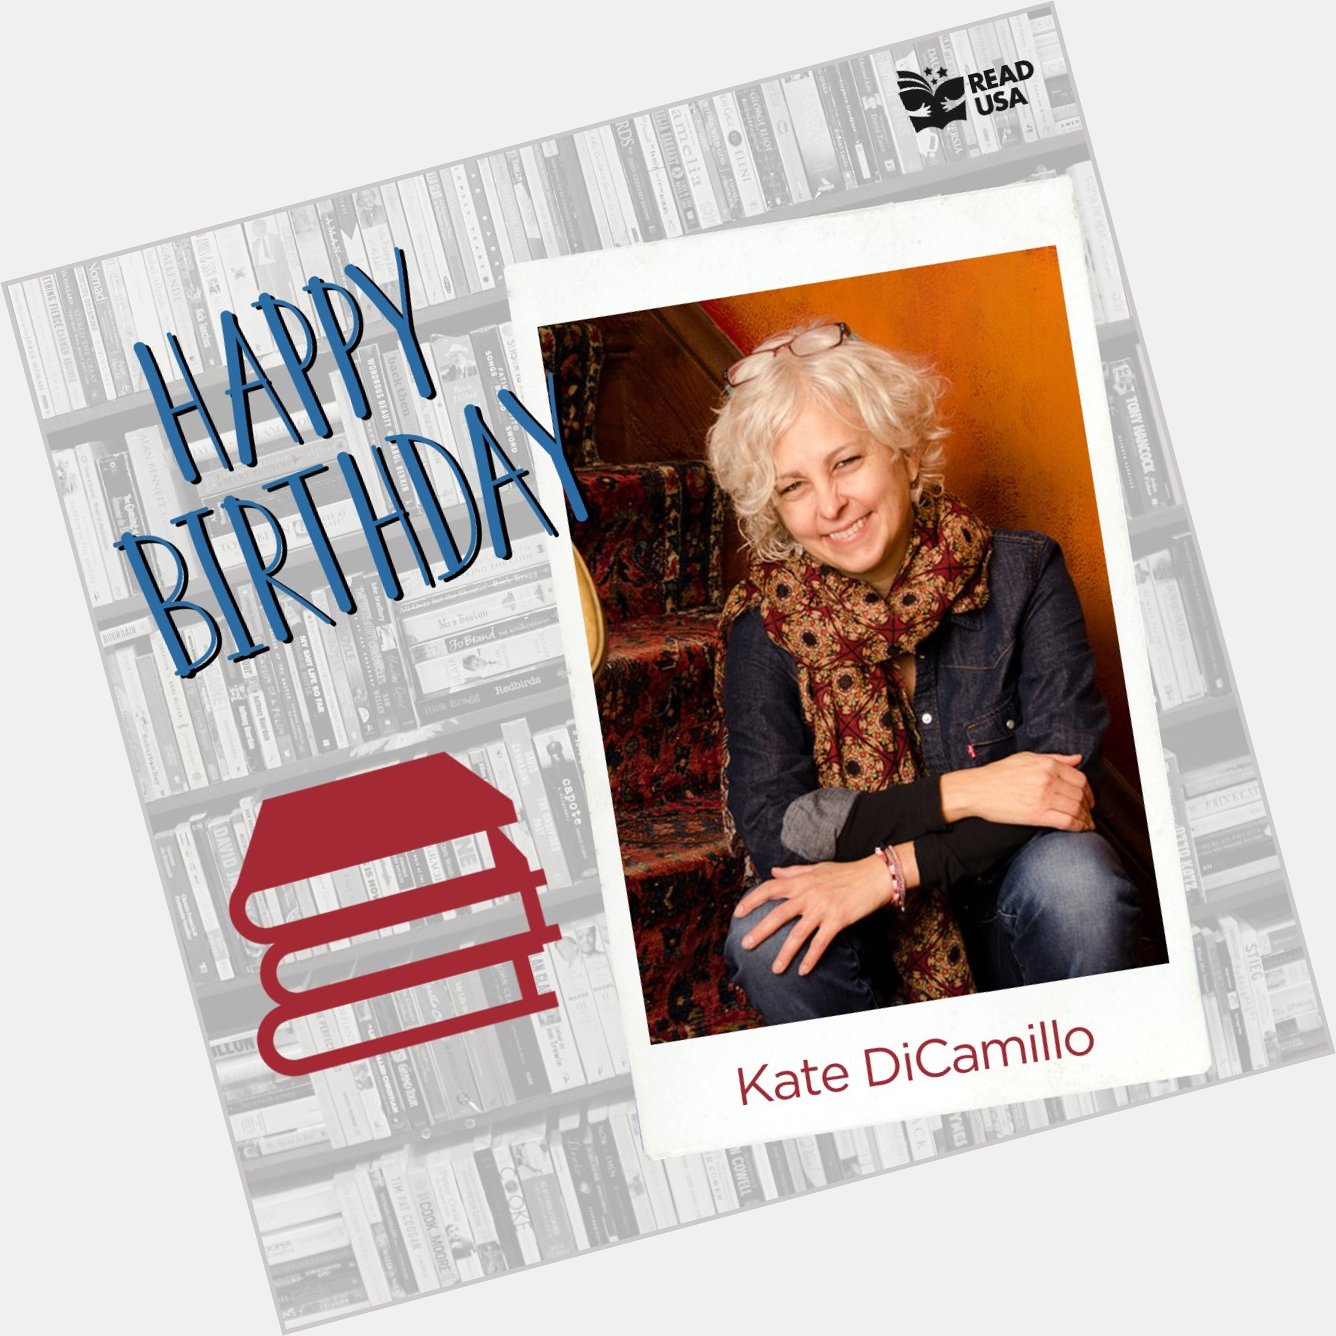 Happy Birthday Kate DiCamillo!  